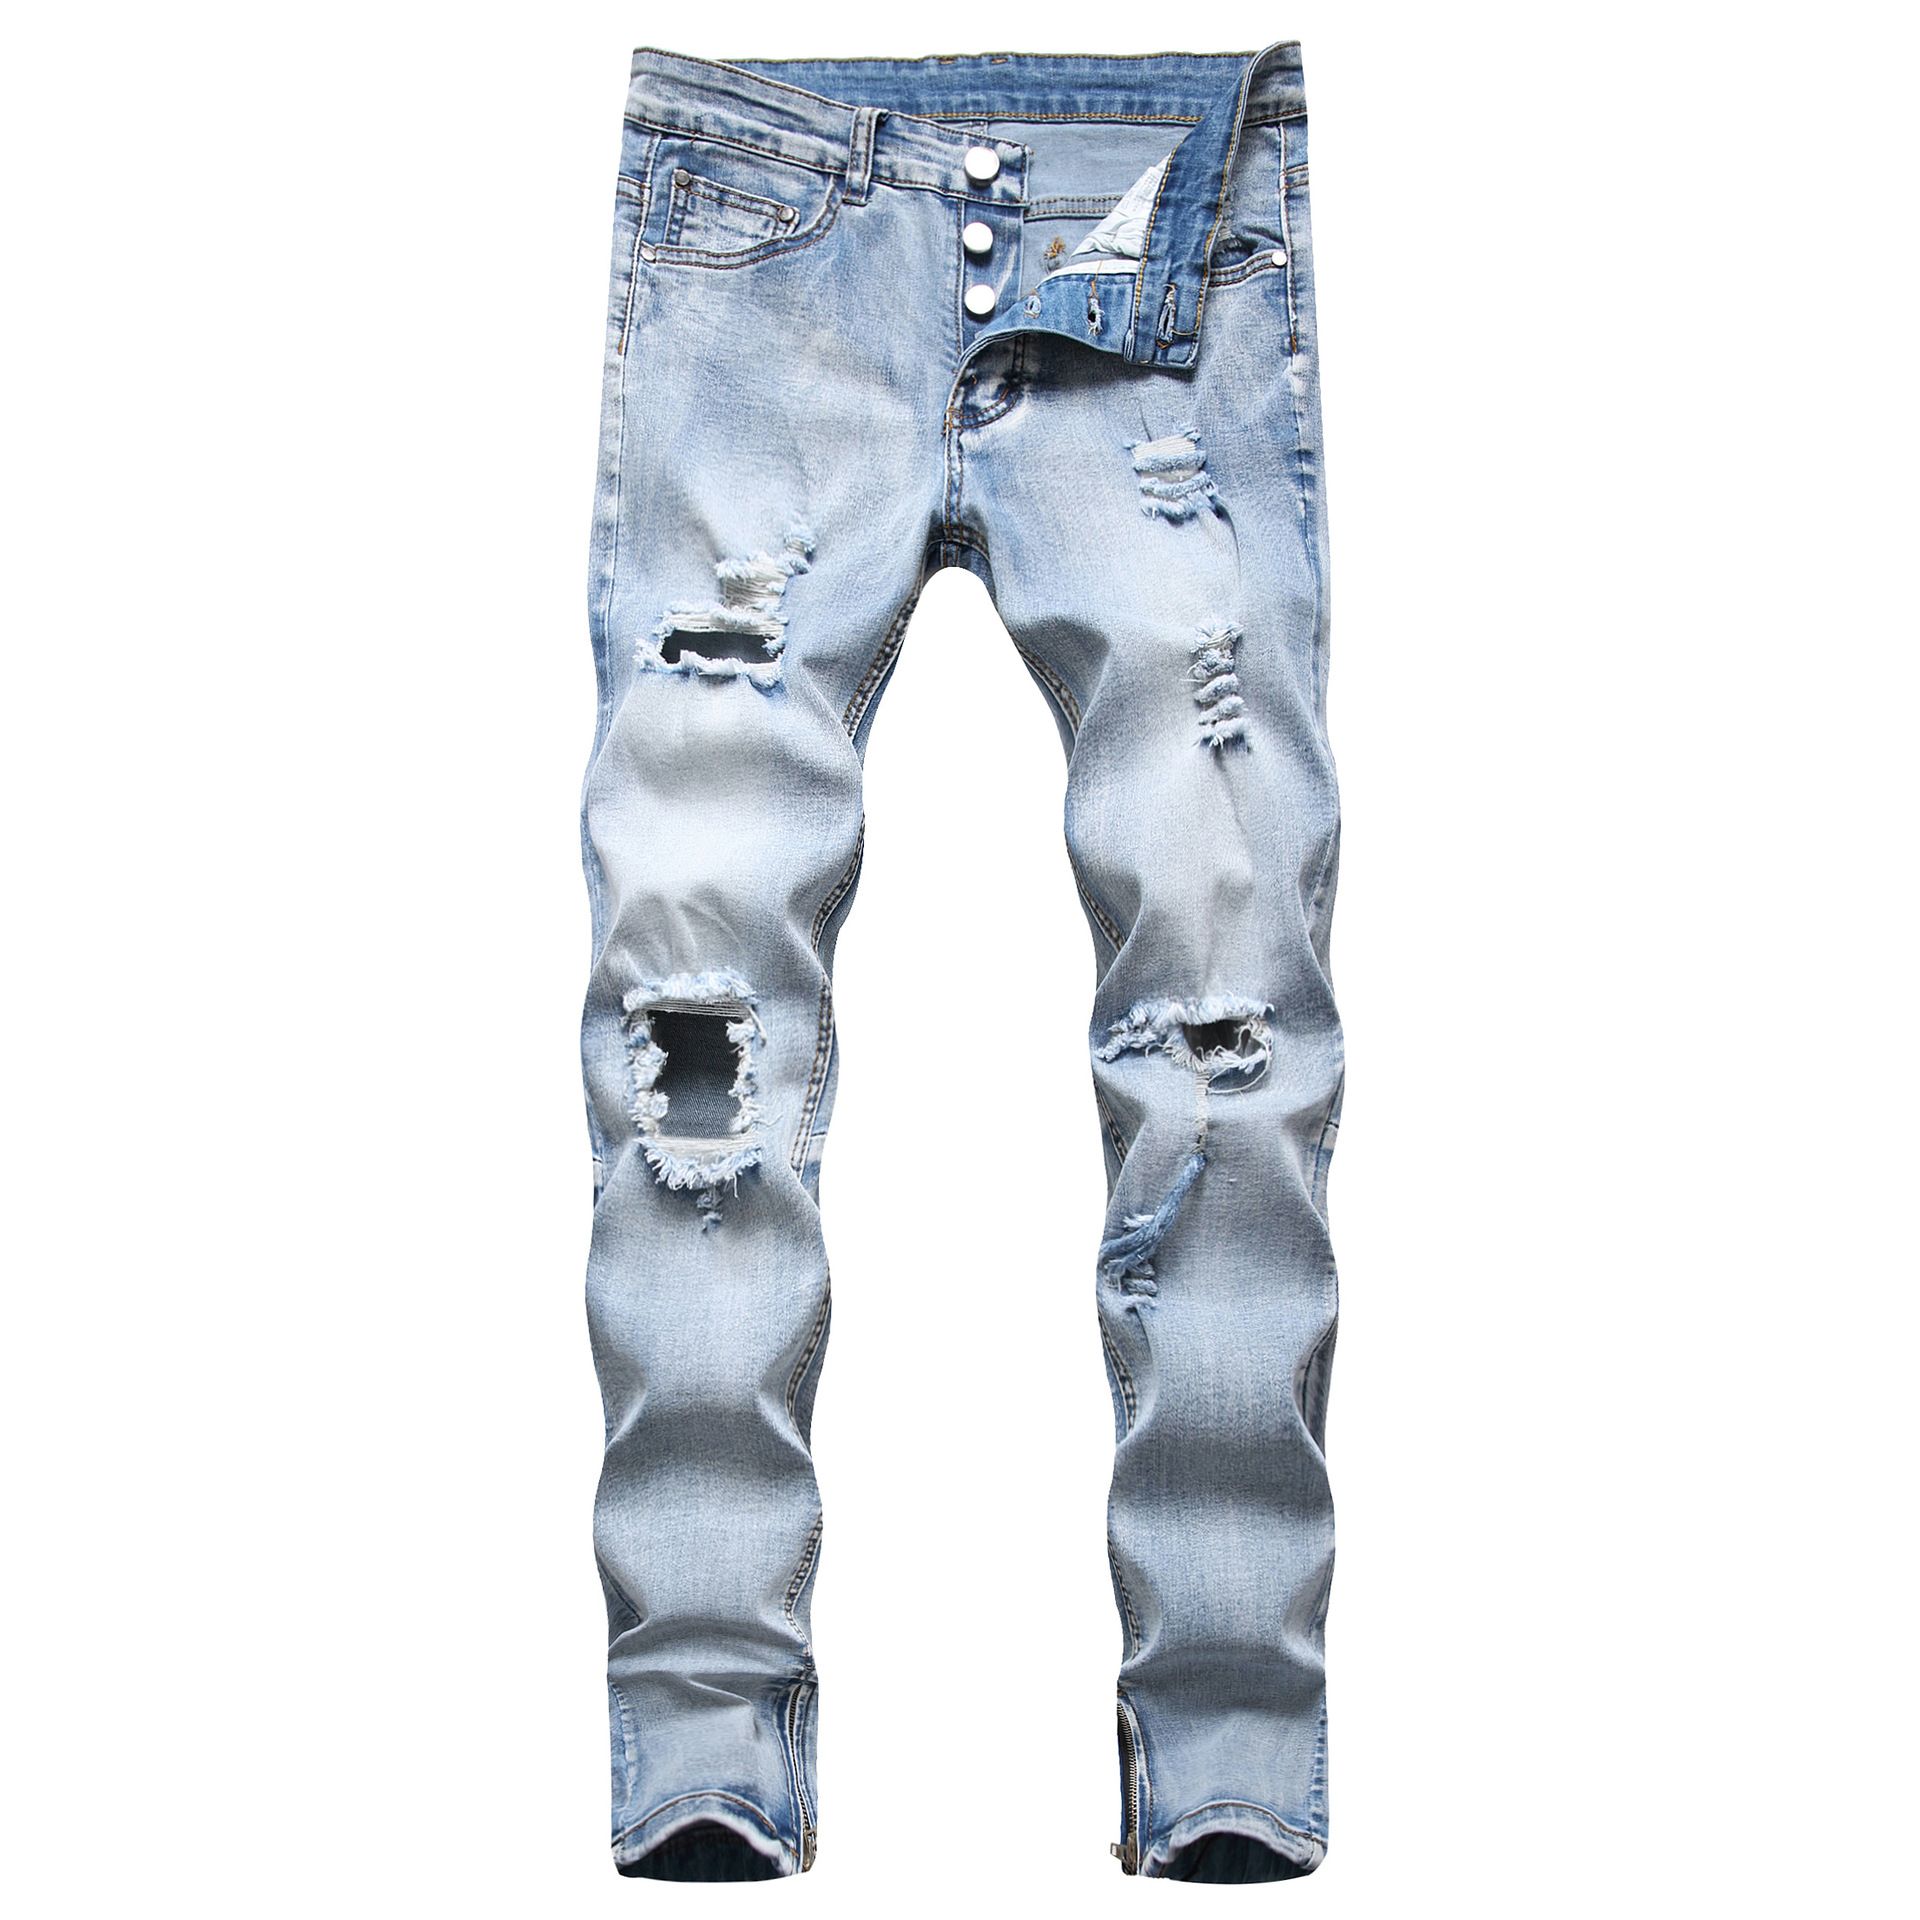 Heren jeans mode zip leggs gescheurd gat lichtblauwe skinny gescheurde vernietigde stretch fit casual